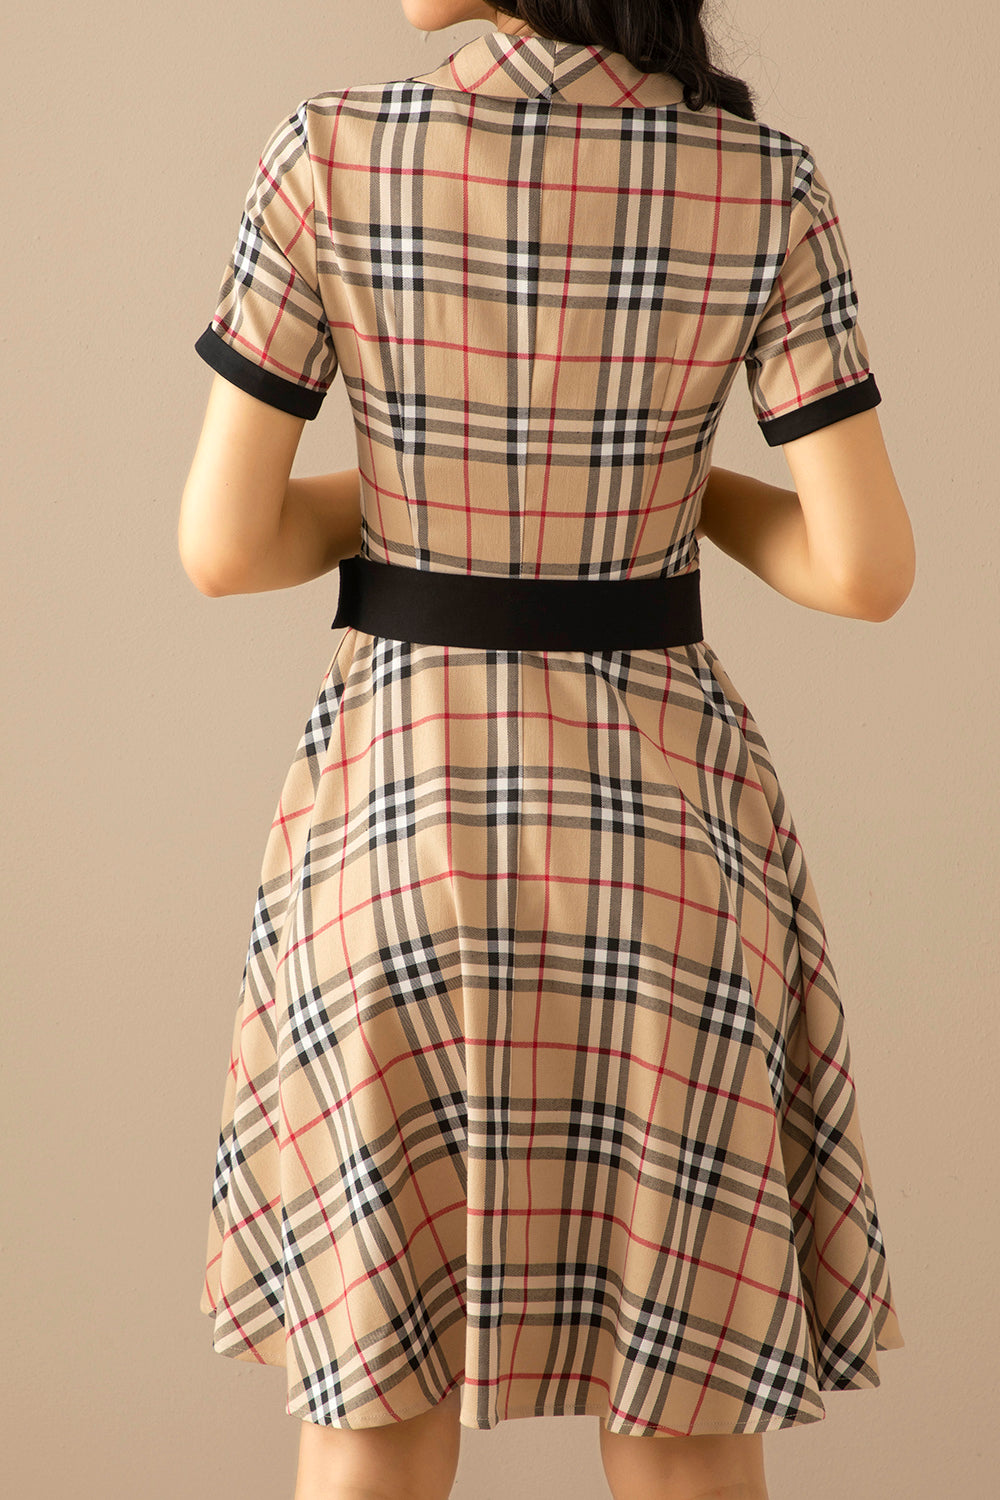 1950s Plaid Swing Vintage Dress